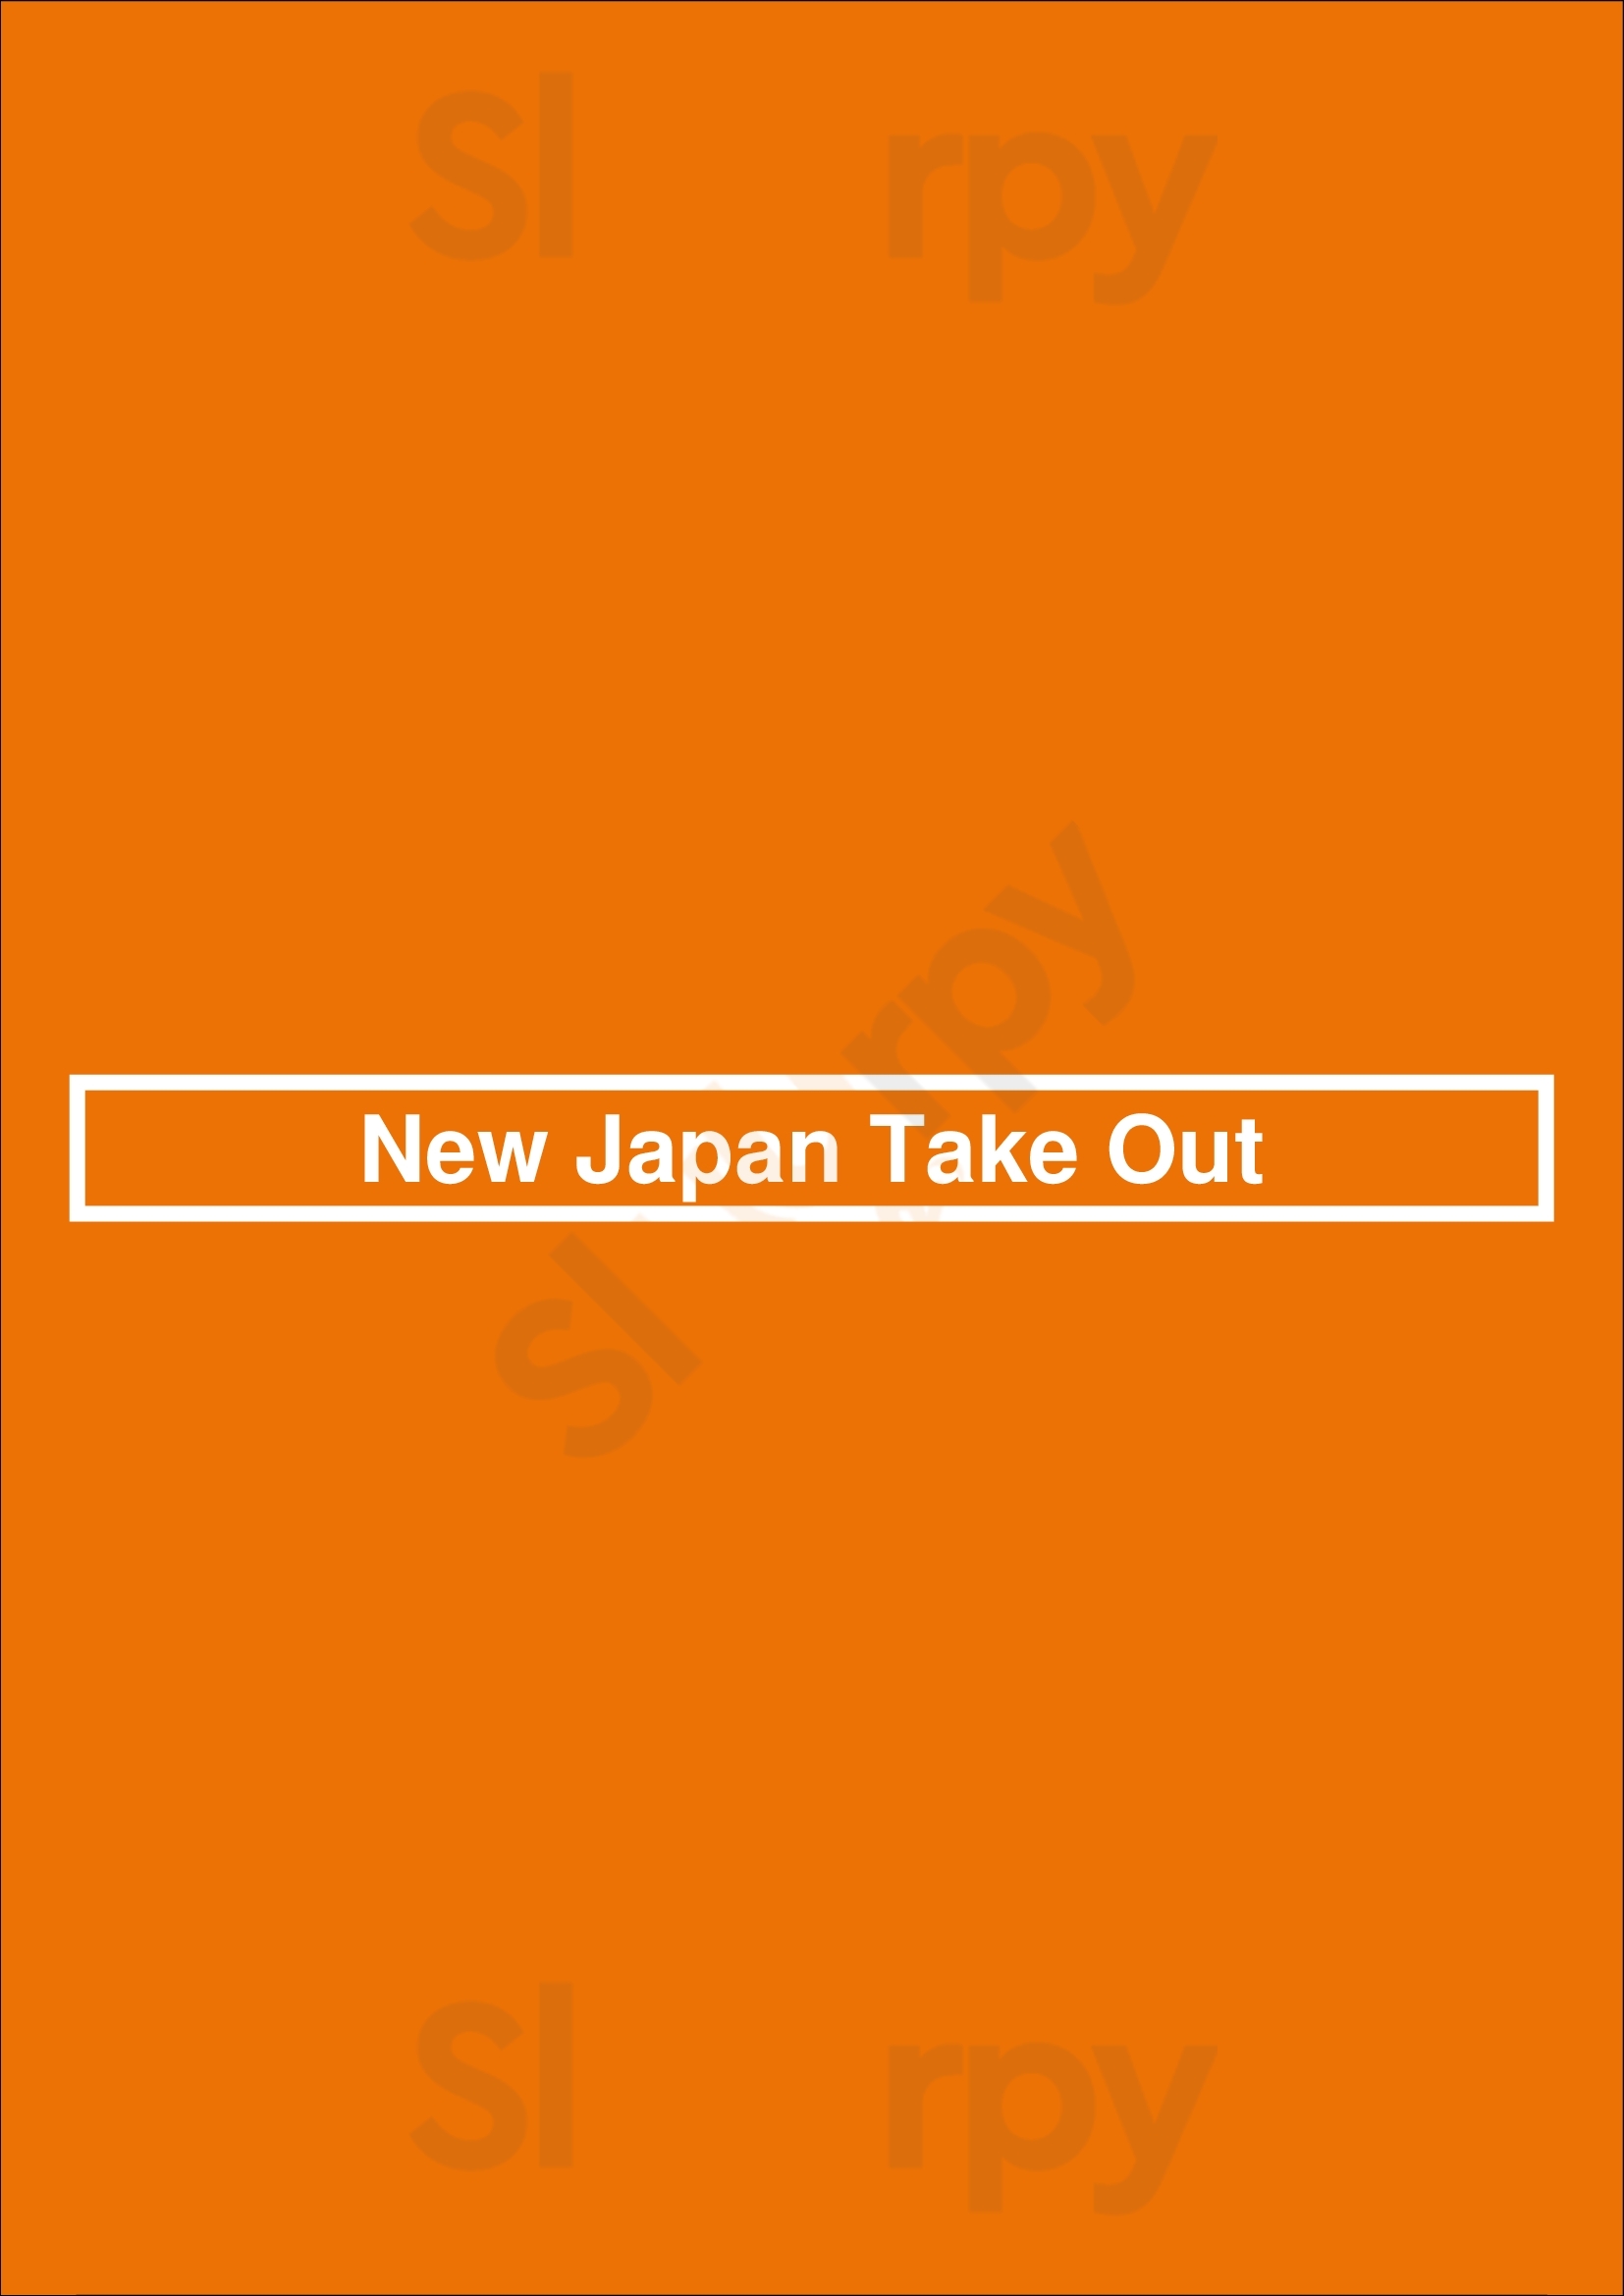 New Japan Take Out Los Angeles Menu - 1